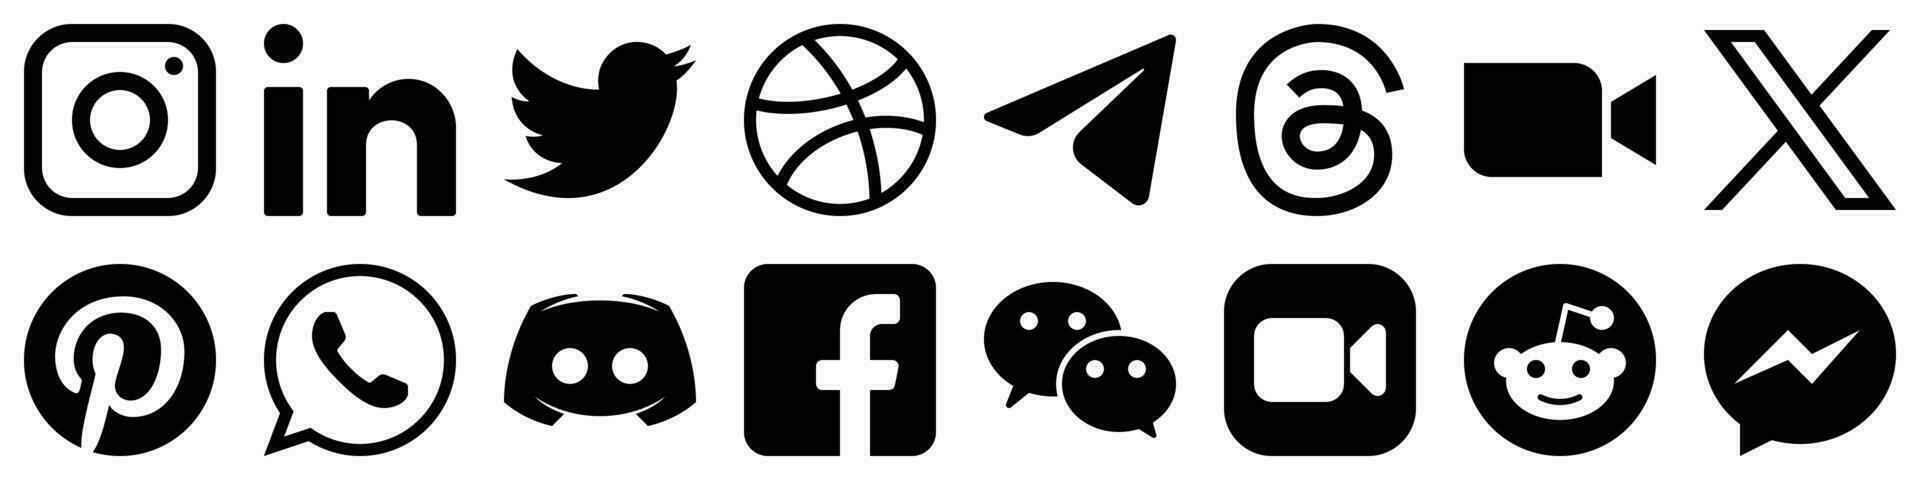 Major social media brand logo icons vector